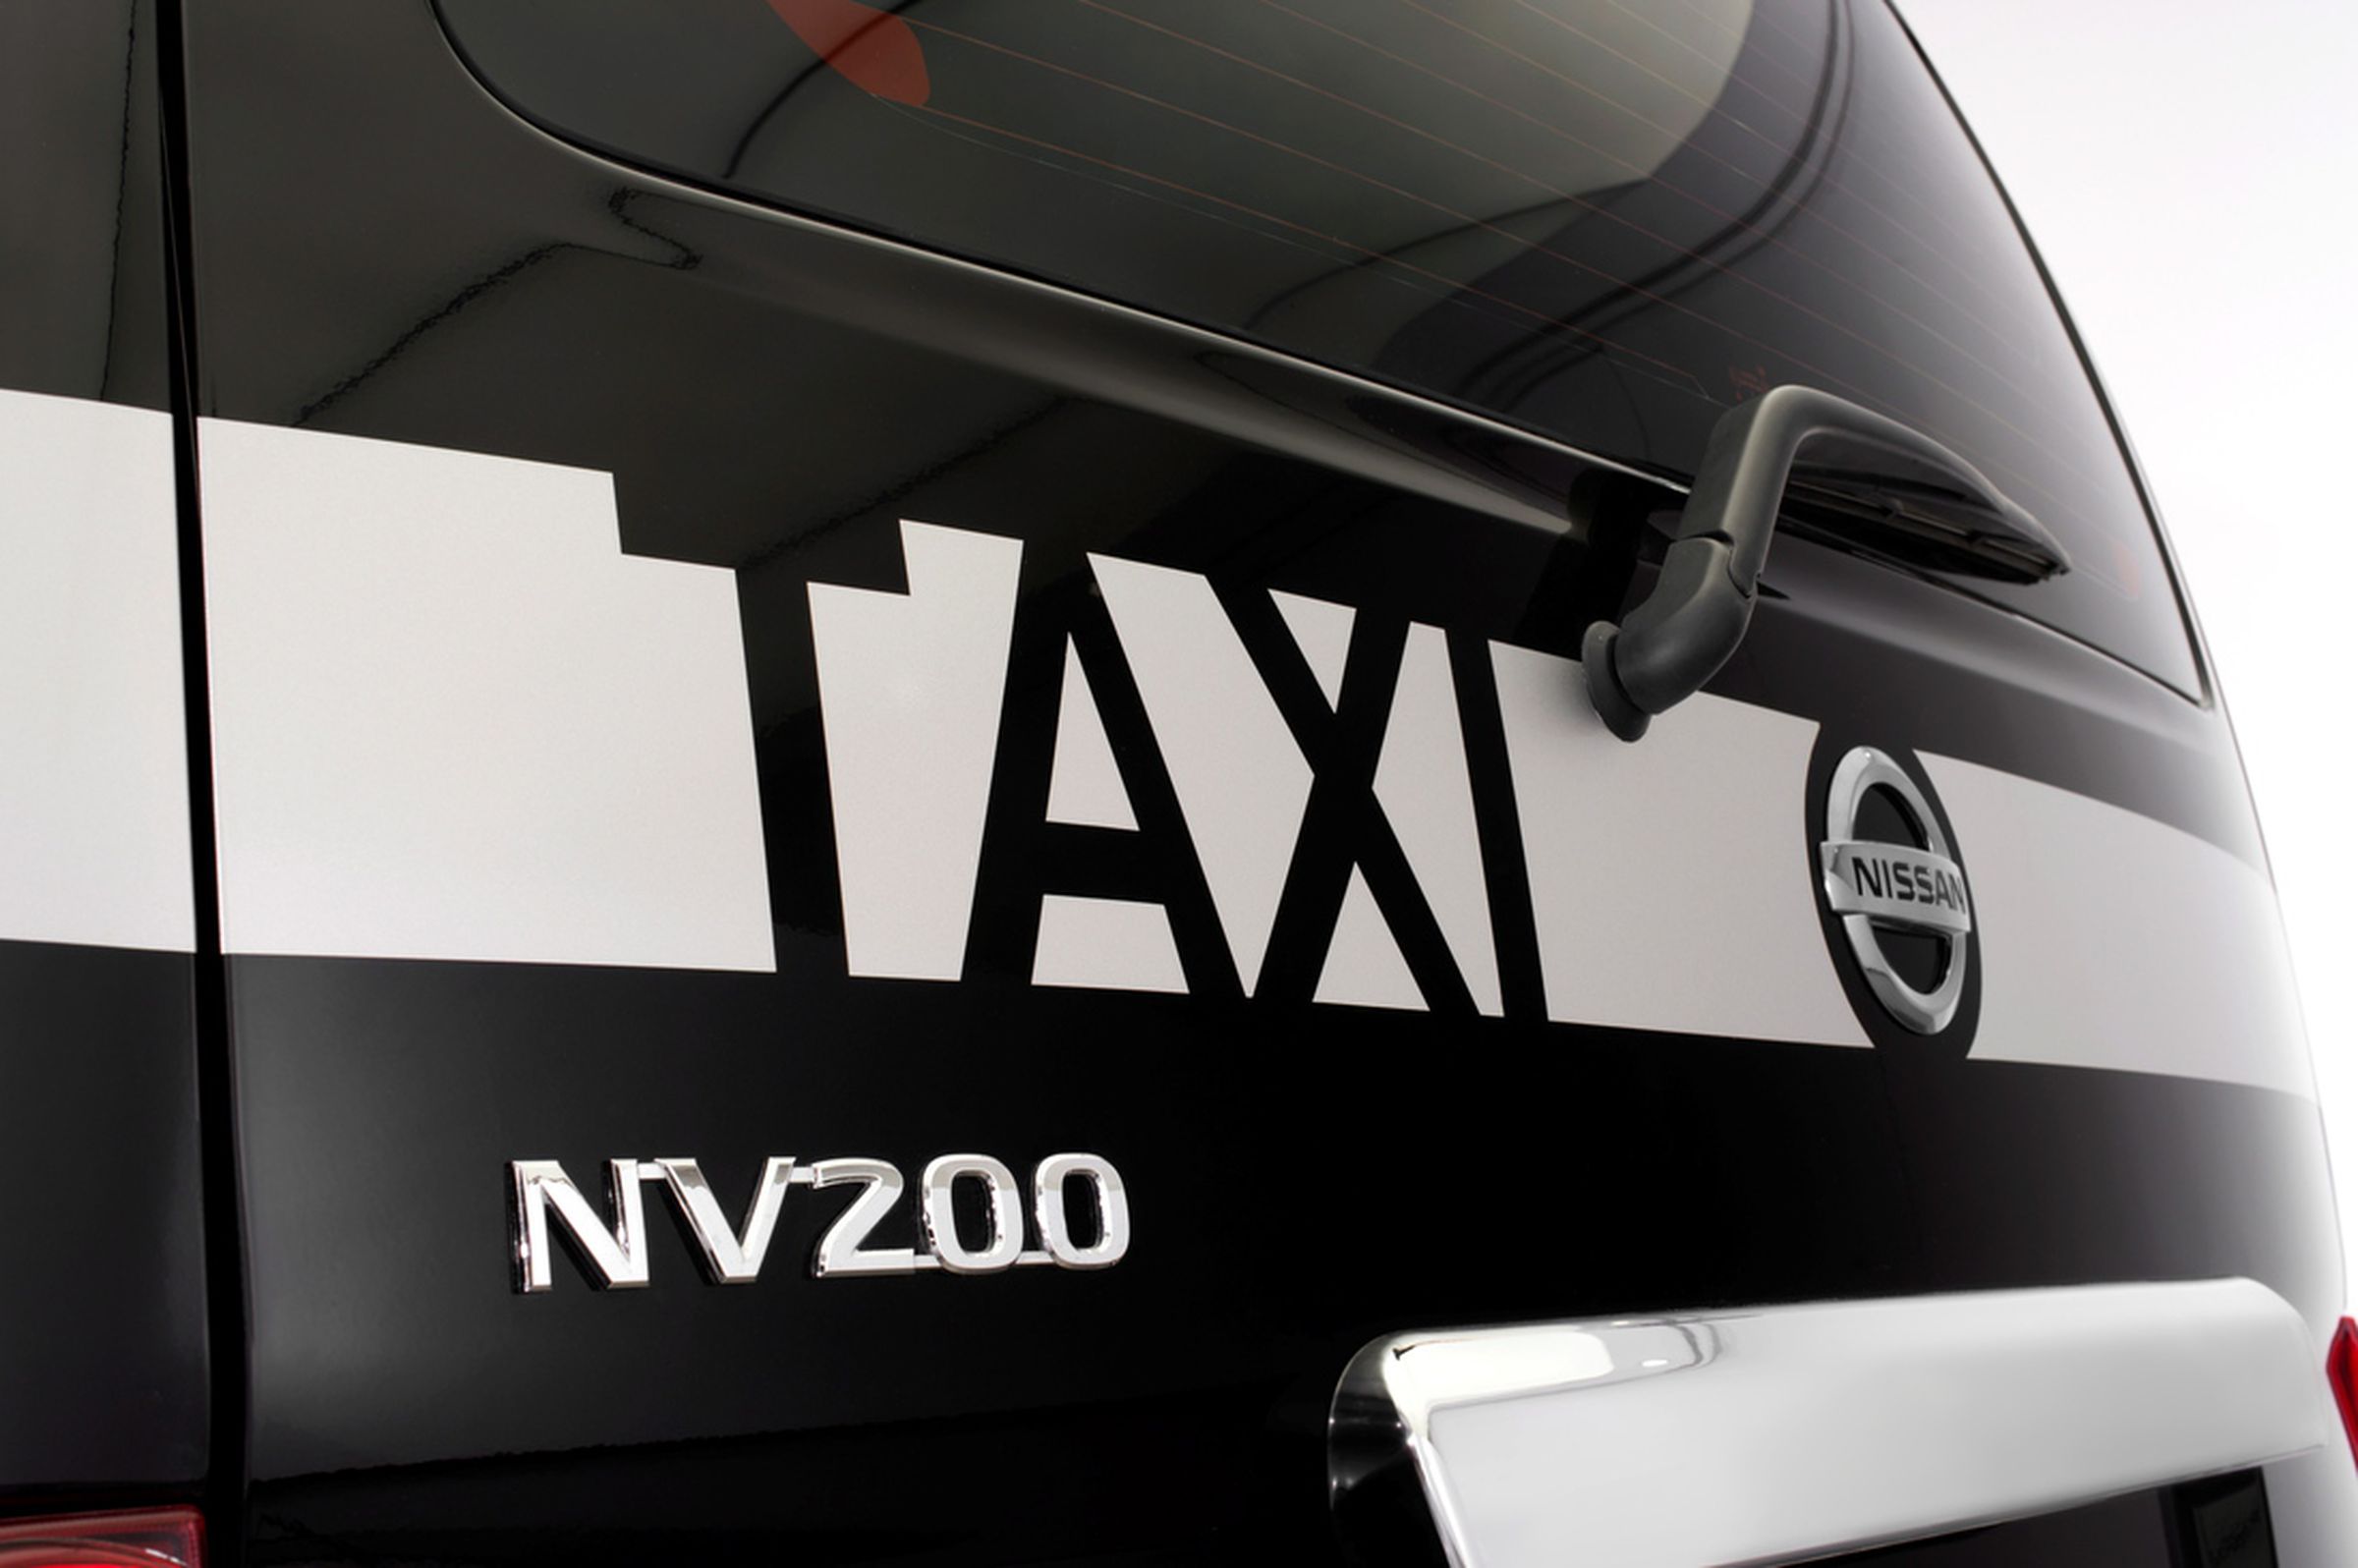 Nissan NV200 London taxi